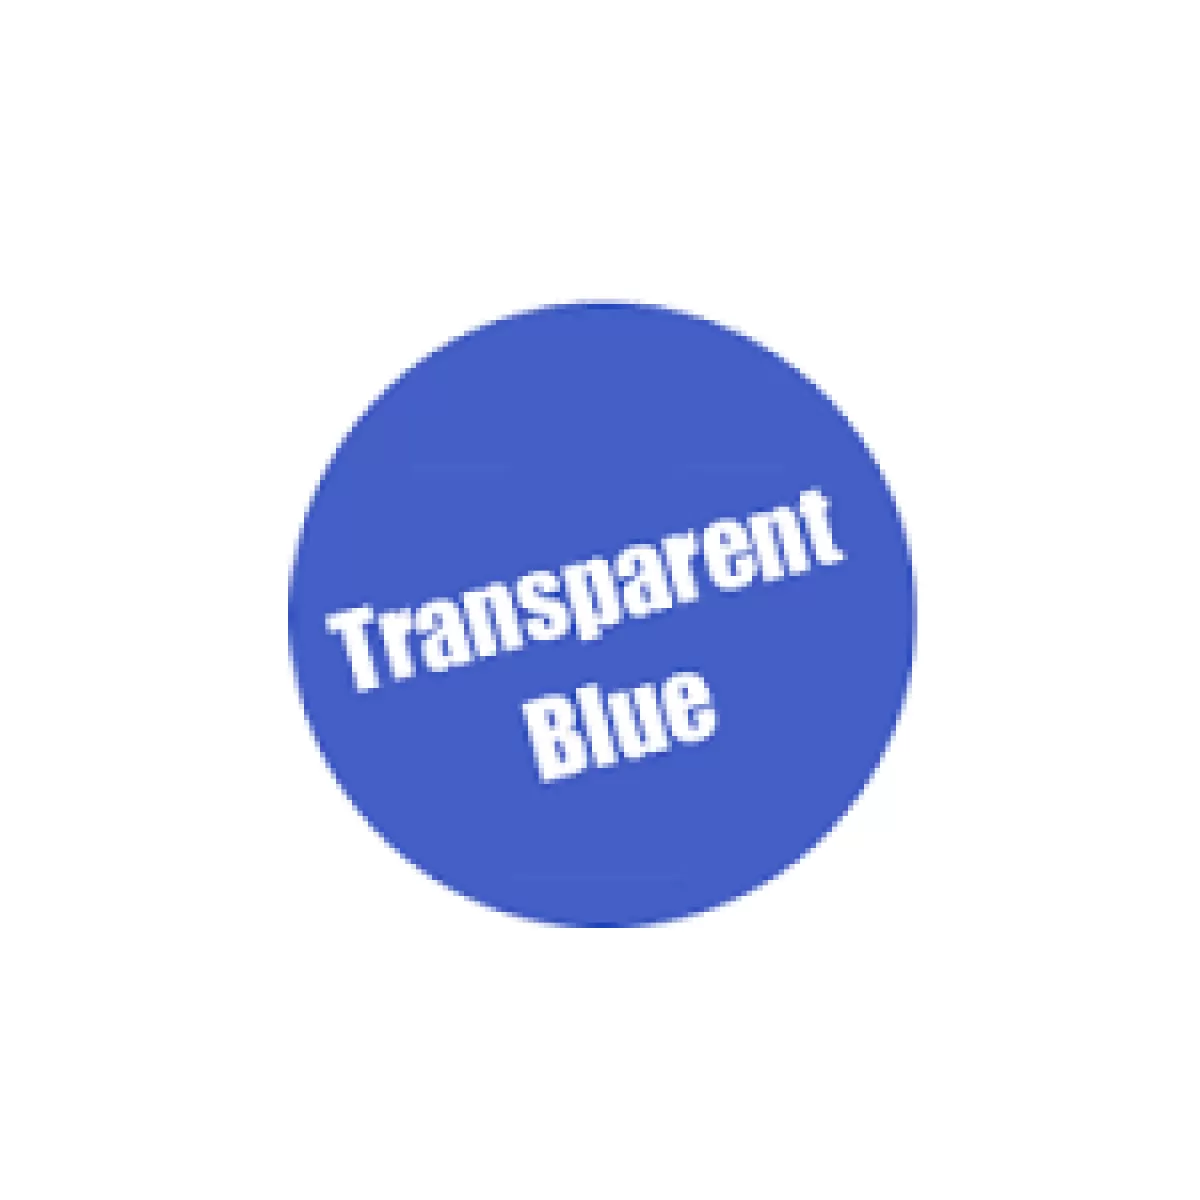 Pro Acryl Transparent Blue